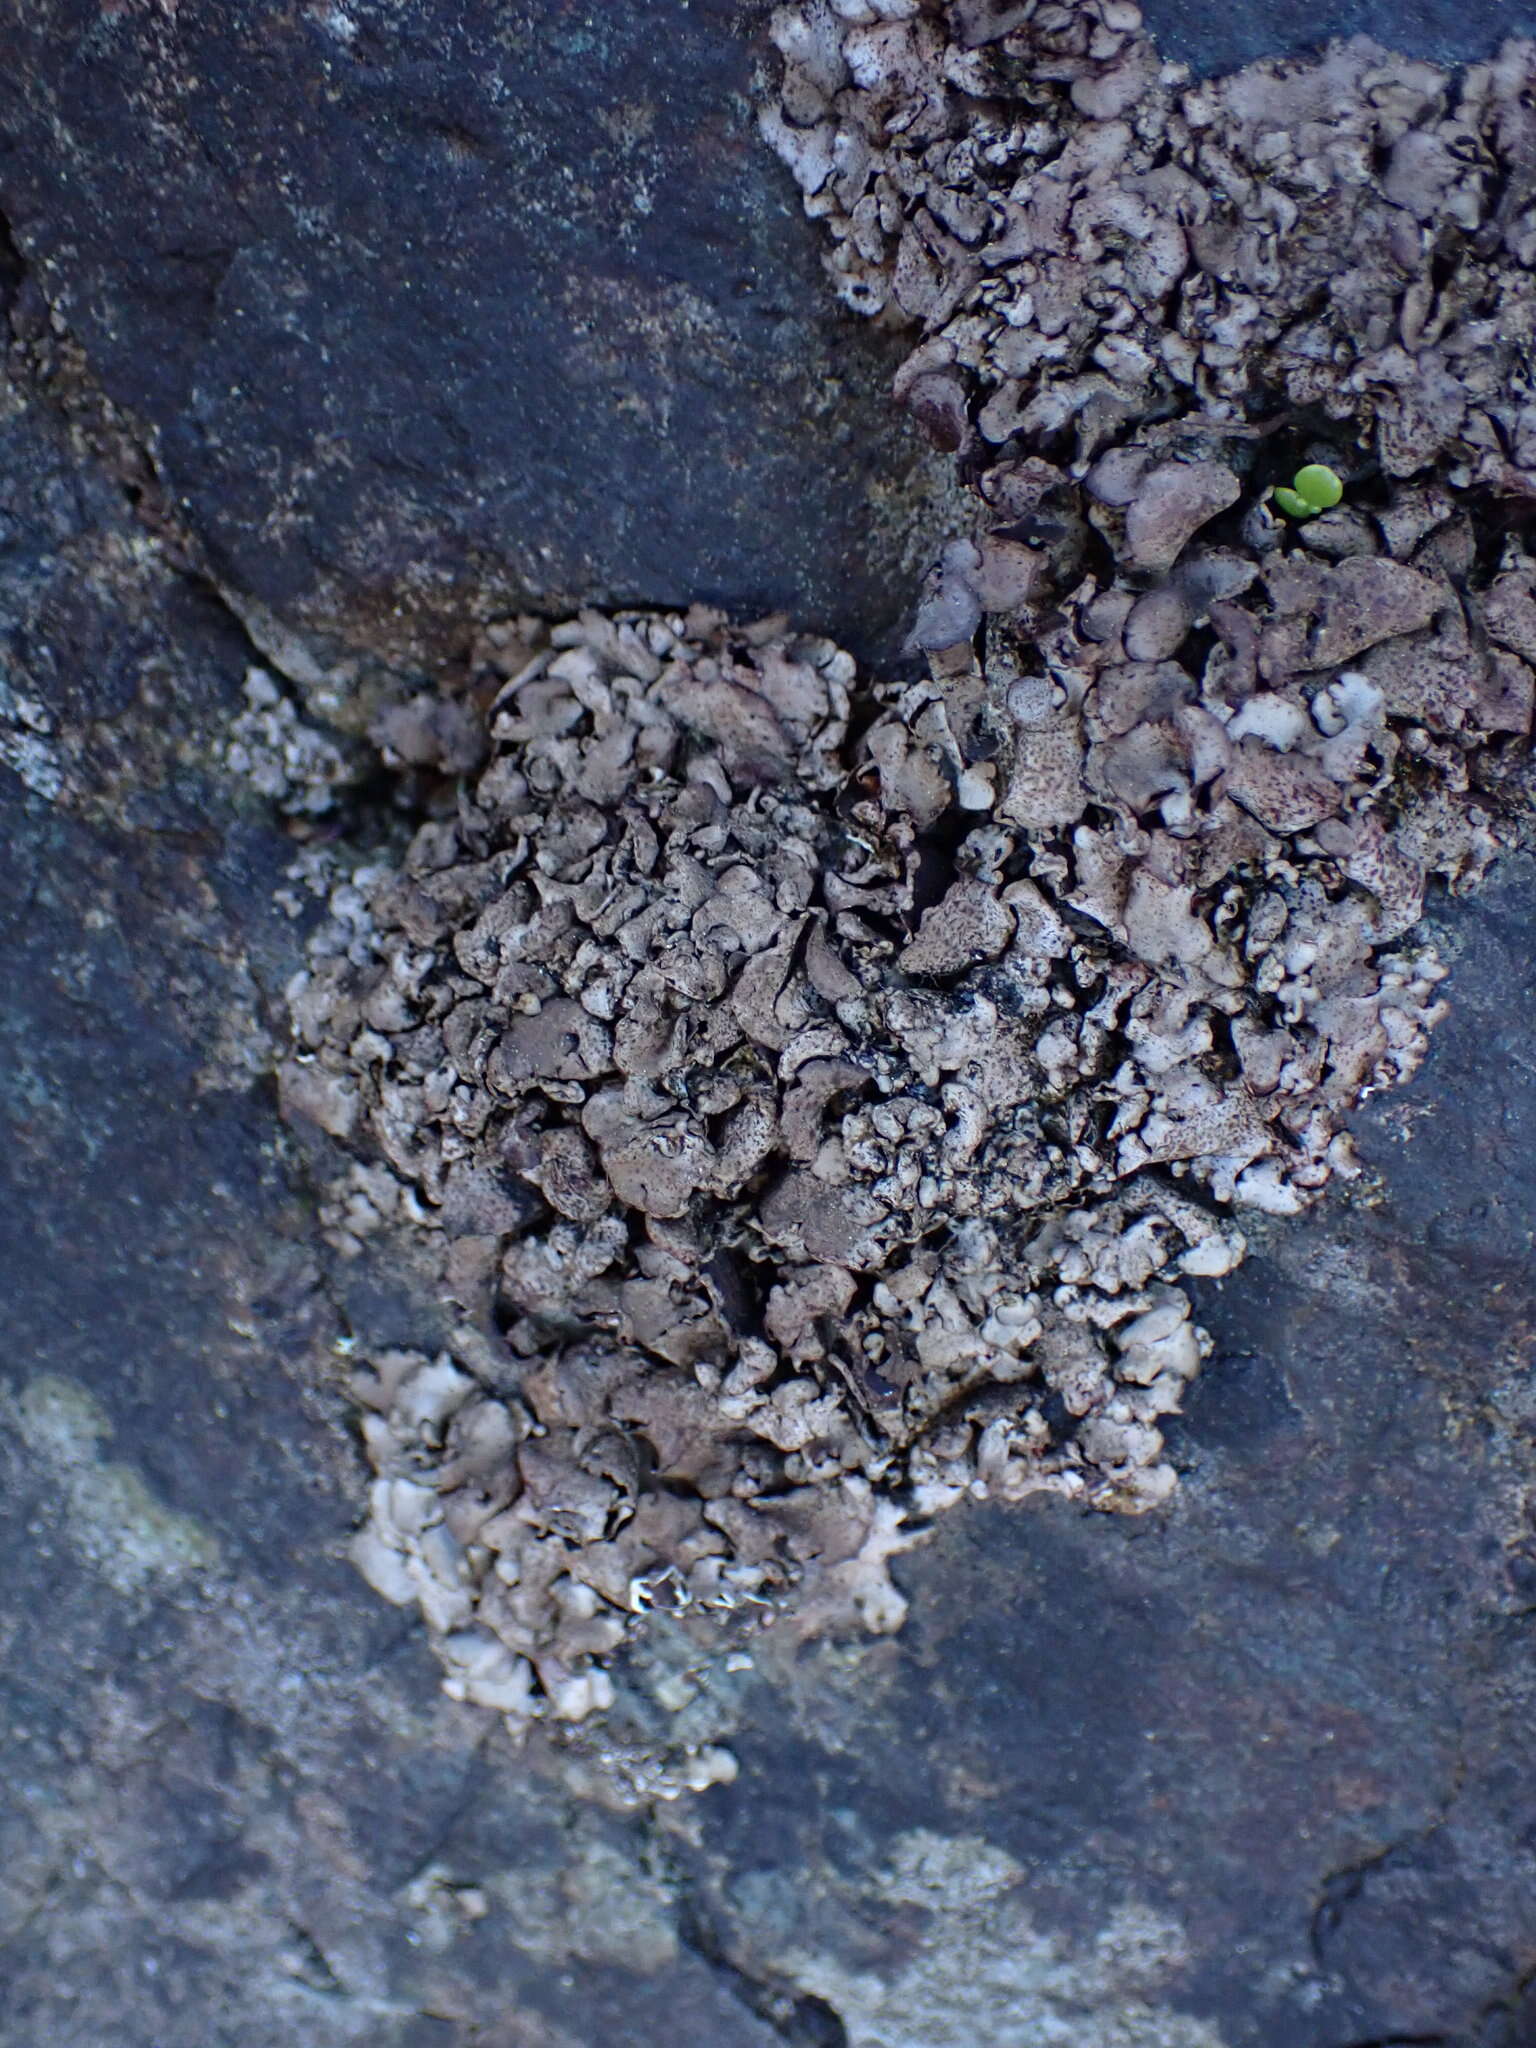 Image of reticulate silverskin lichen